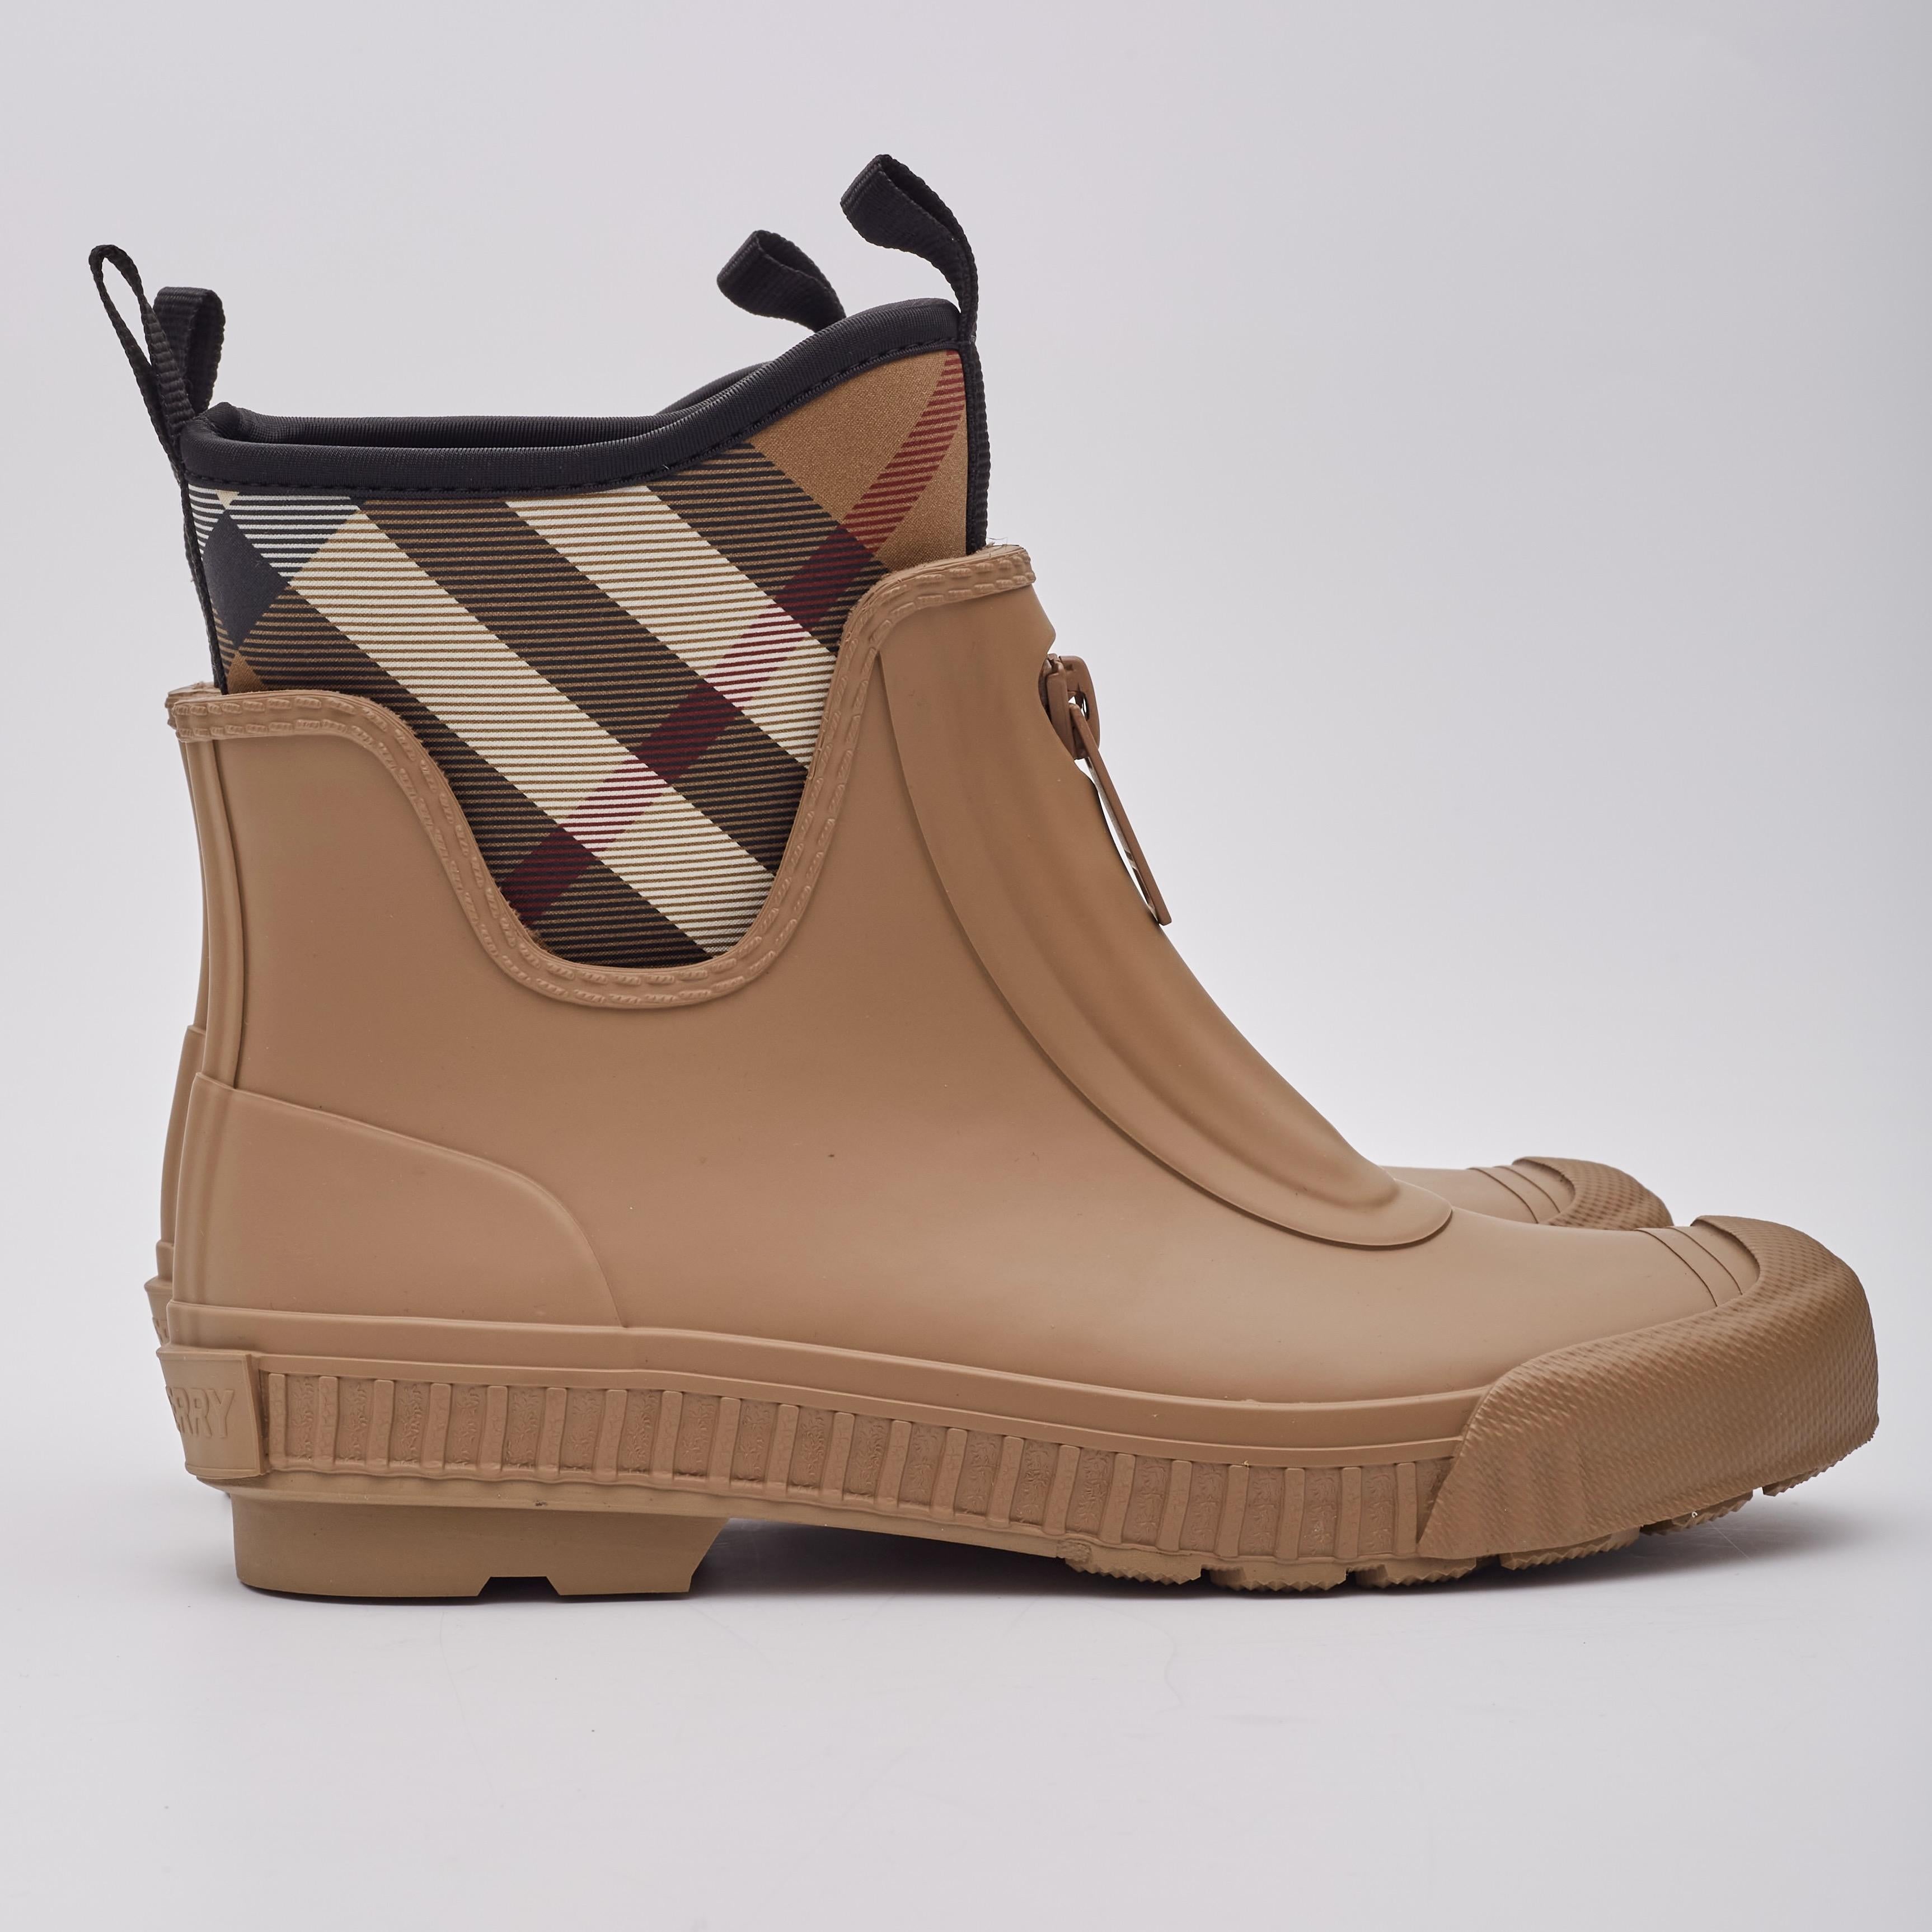 Burberry Rubber & Neoprene Check Brown Rain Boots (38 EU) 3